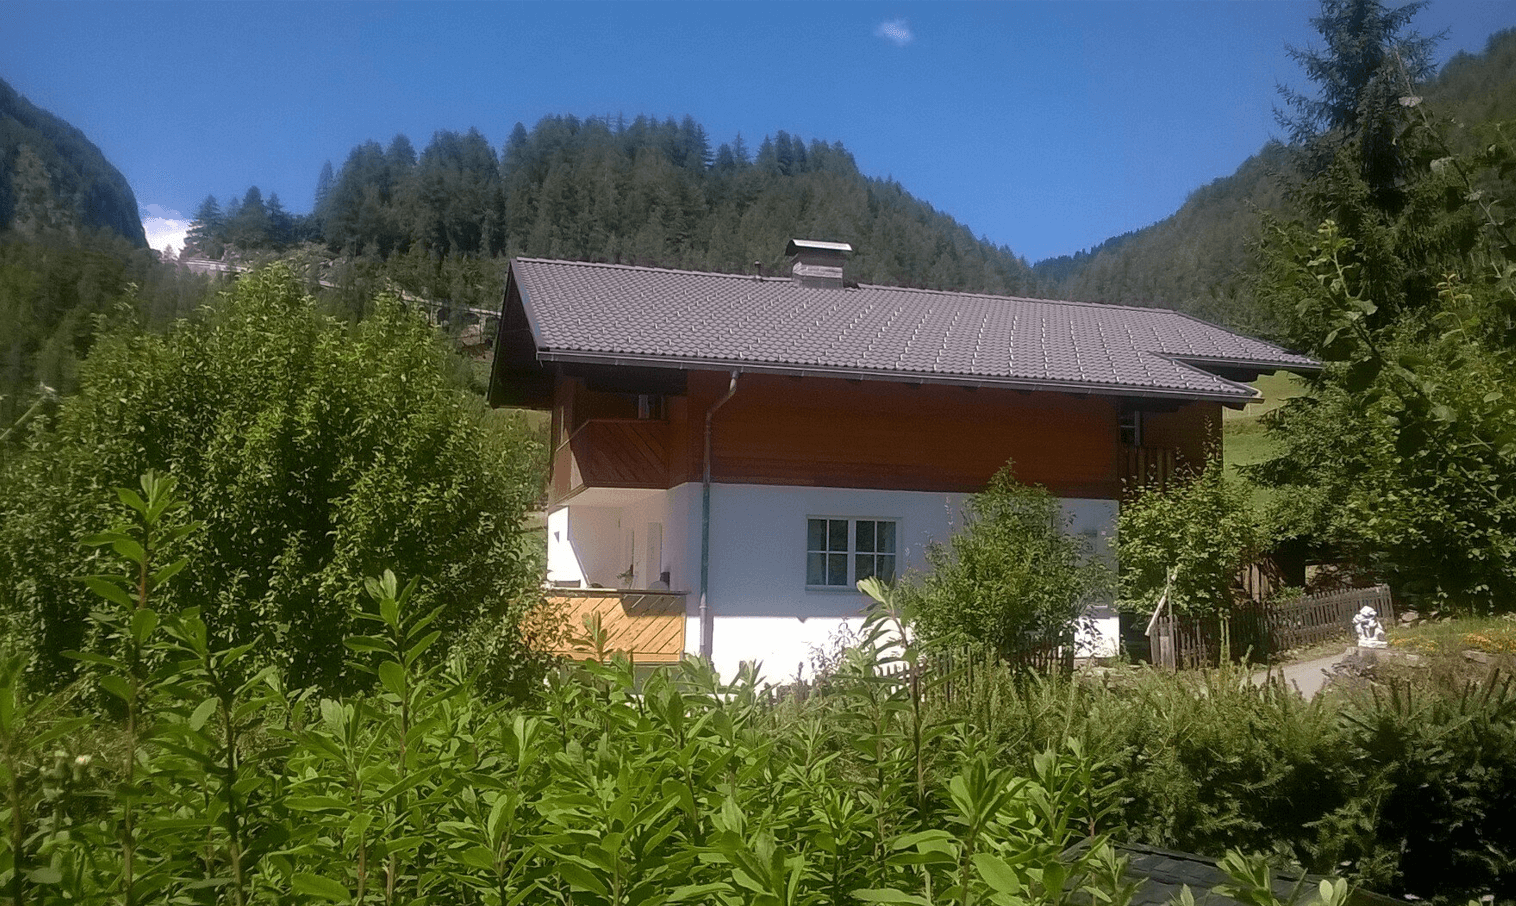  Haus Mildner, Pension in Heiligenblut